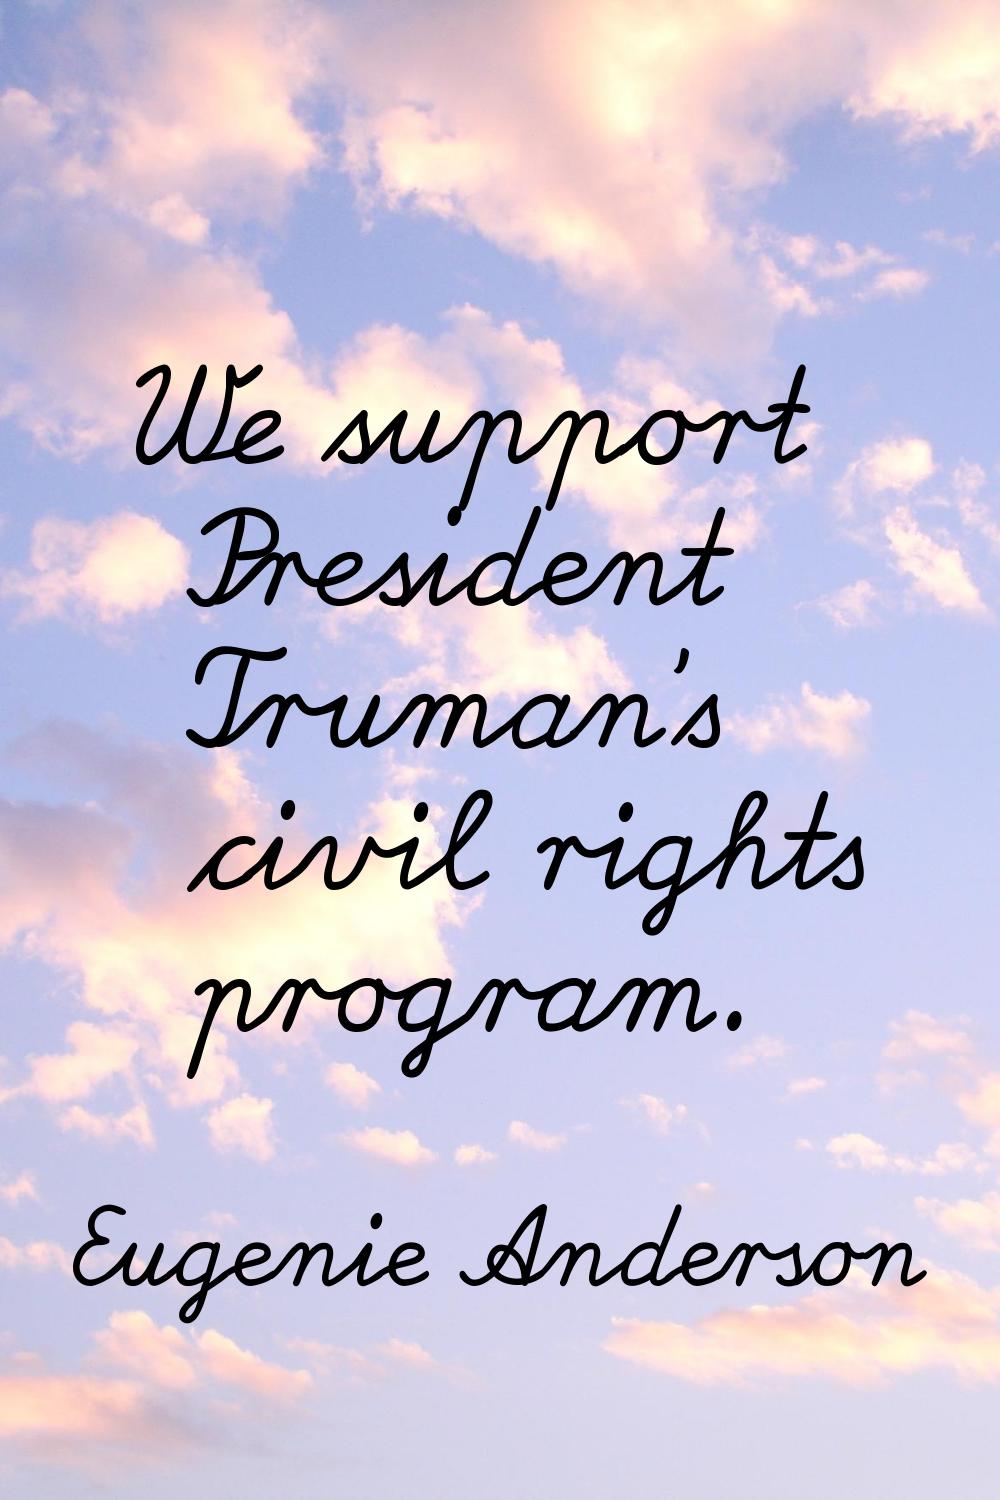 We support President Truman's civil rights program.